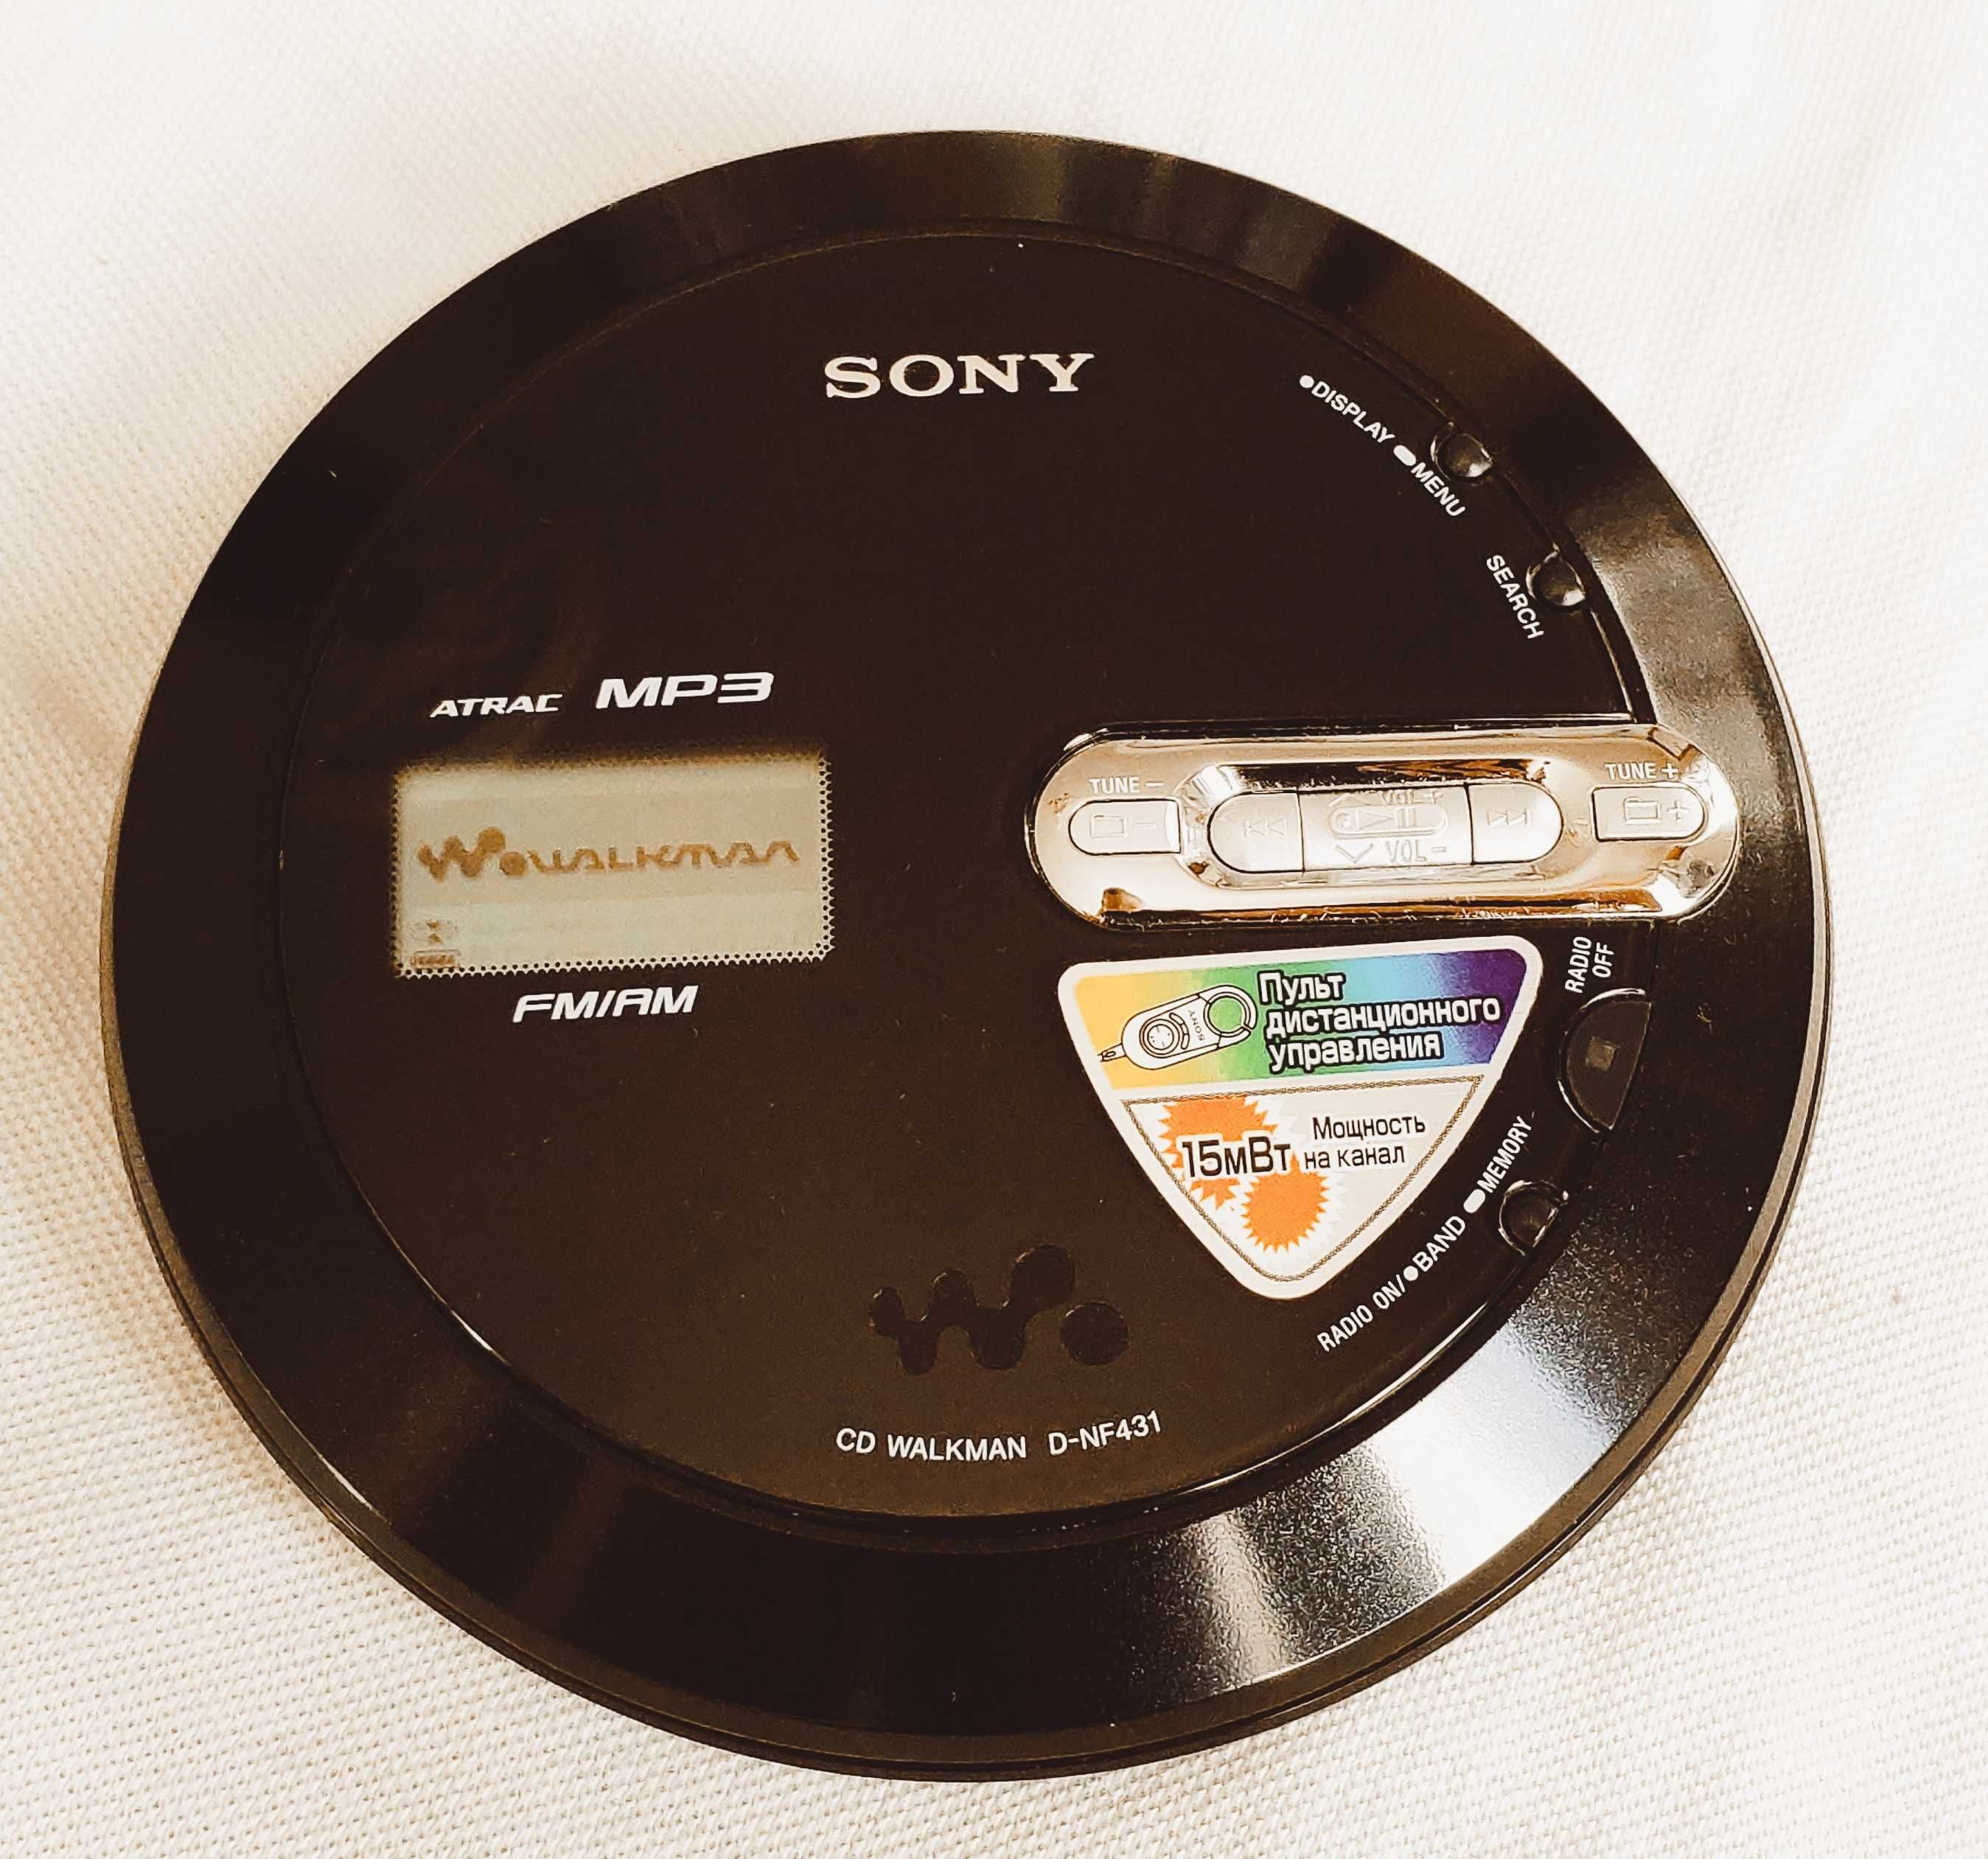 SONY Walkman Atrac CD D-NF431